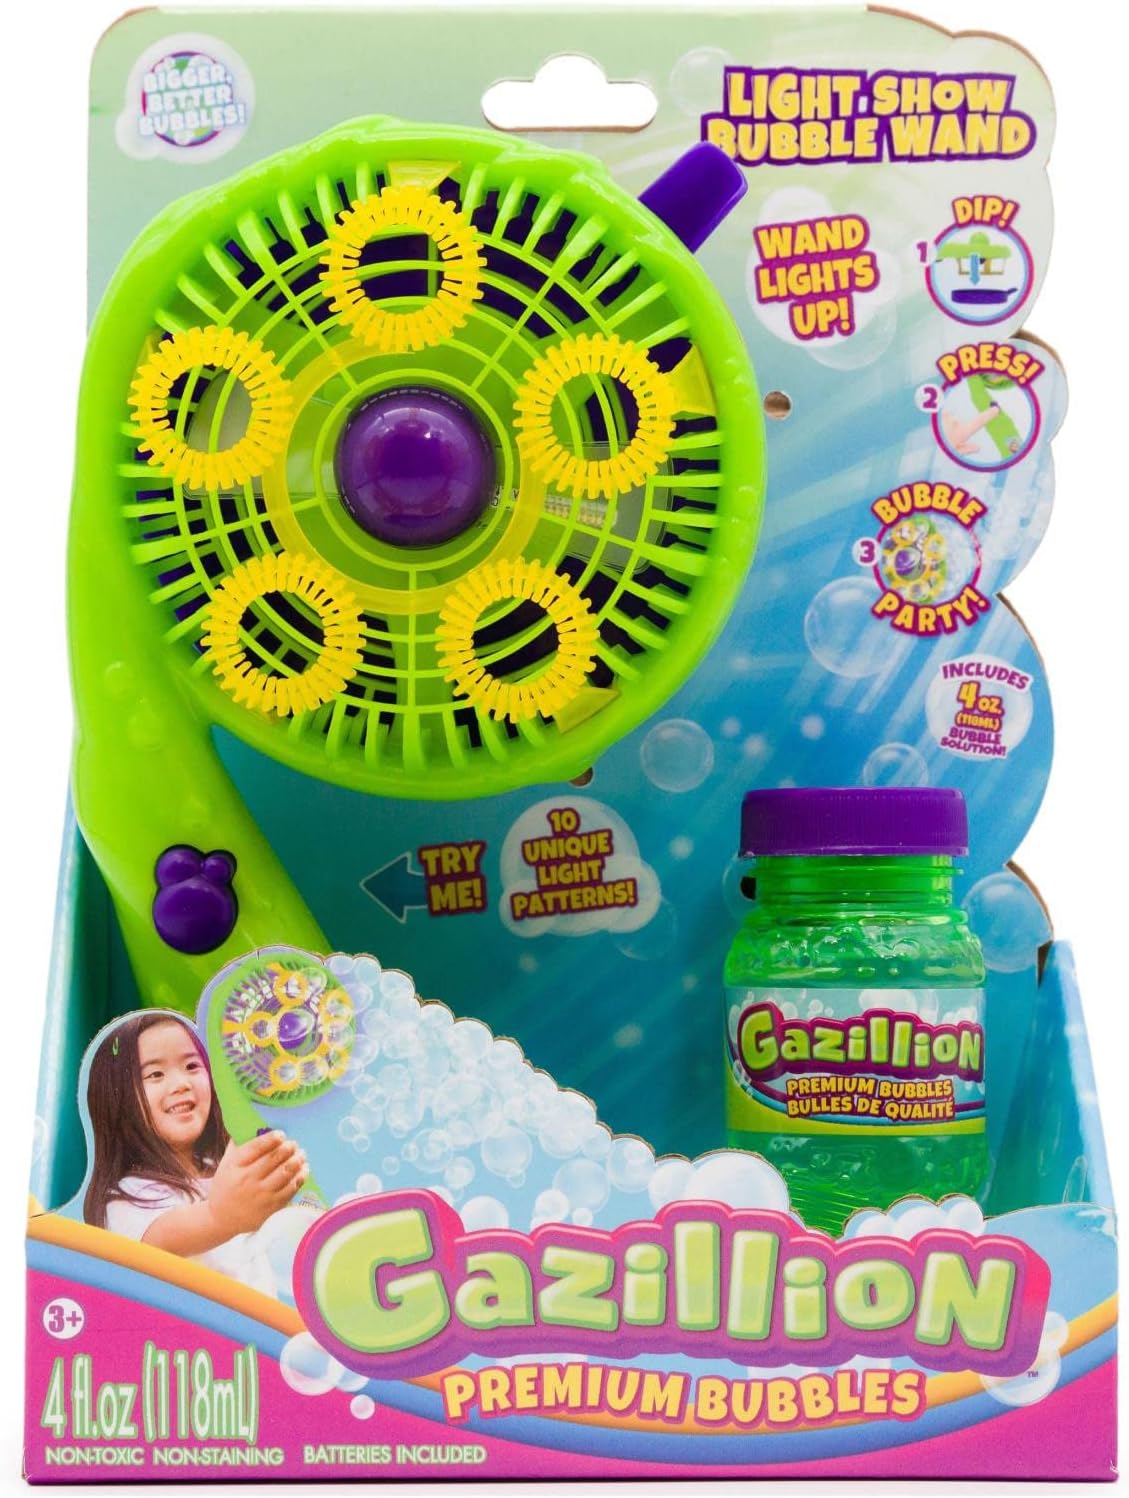 Gazillion Light Show Bubble Wand Req 4 AAA Batteries